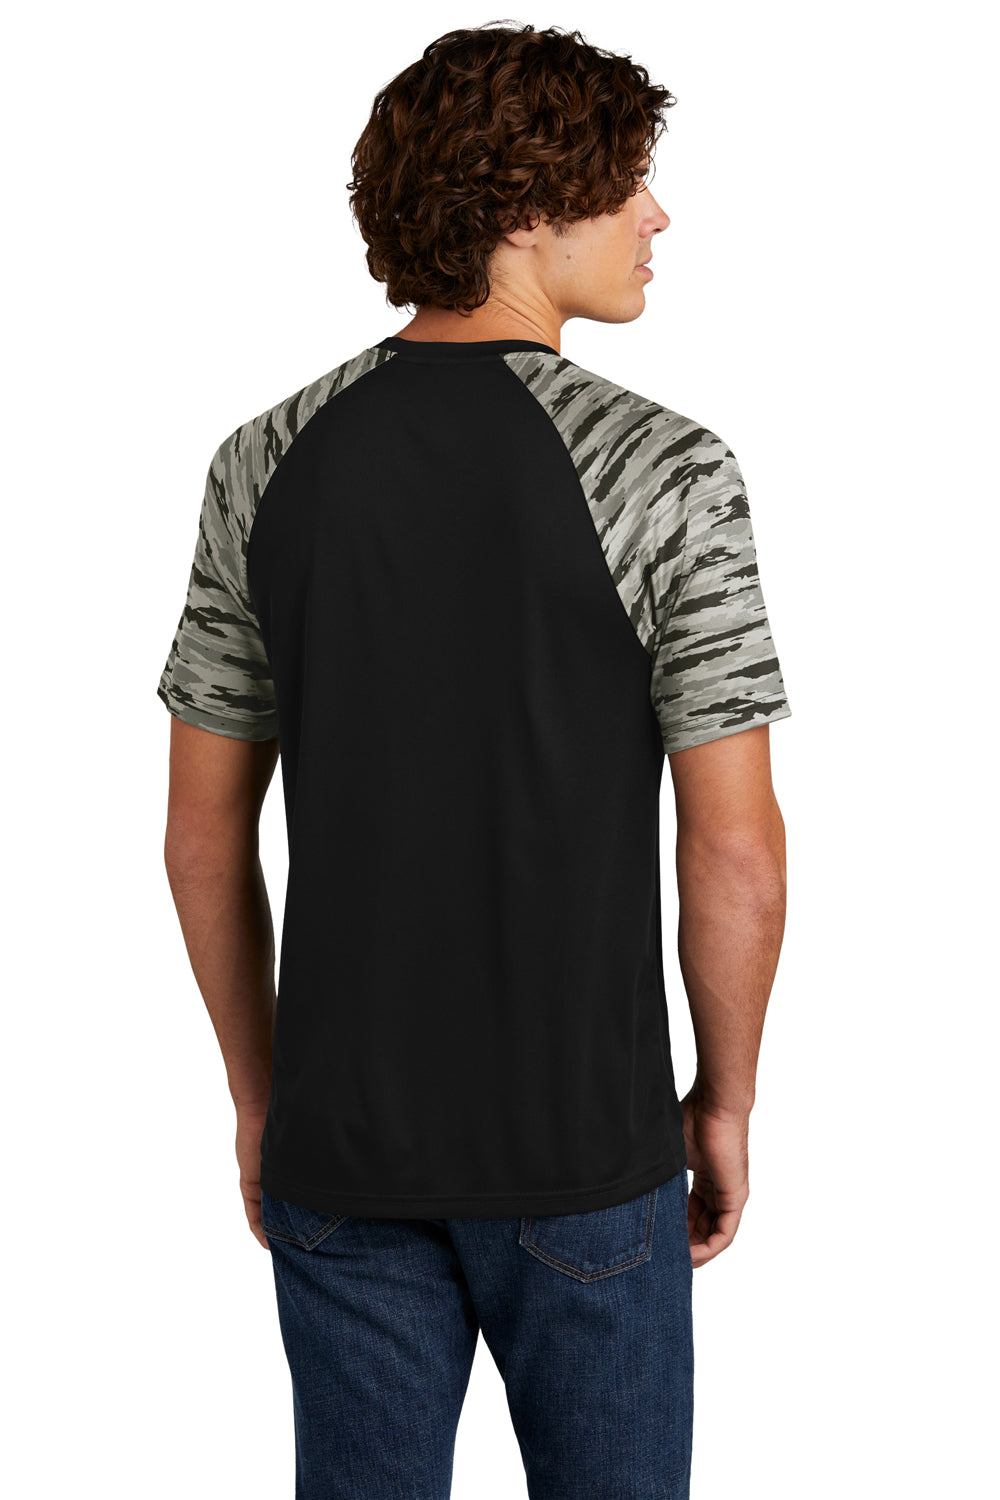 Sport-Tek Mens Drift Camo Colorblock Short Sleeve Crewneck T-Shirt Black Back